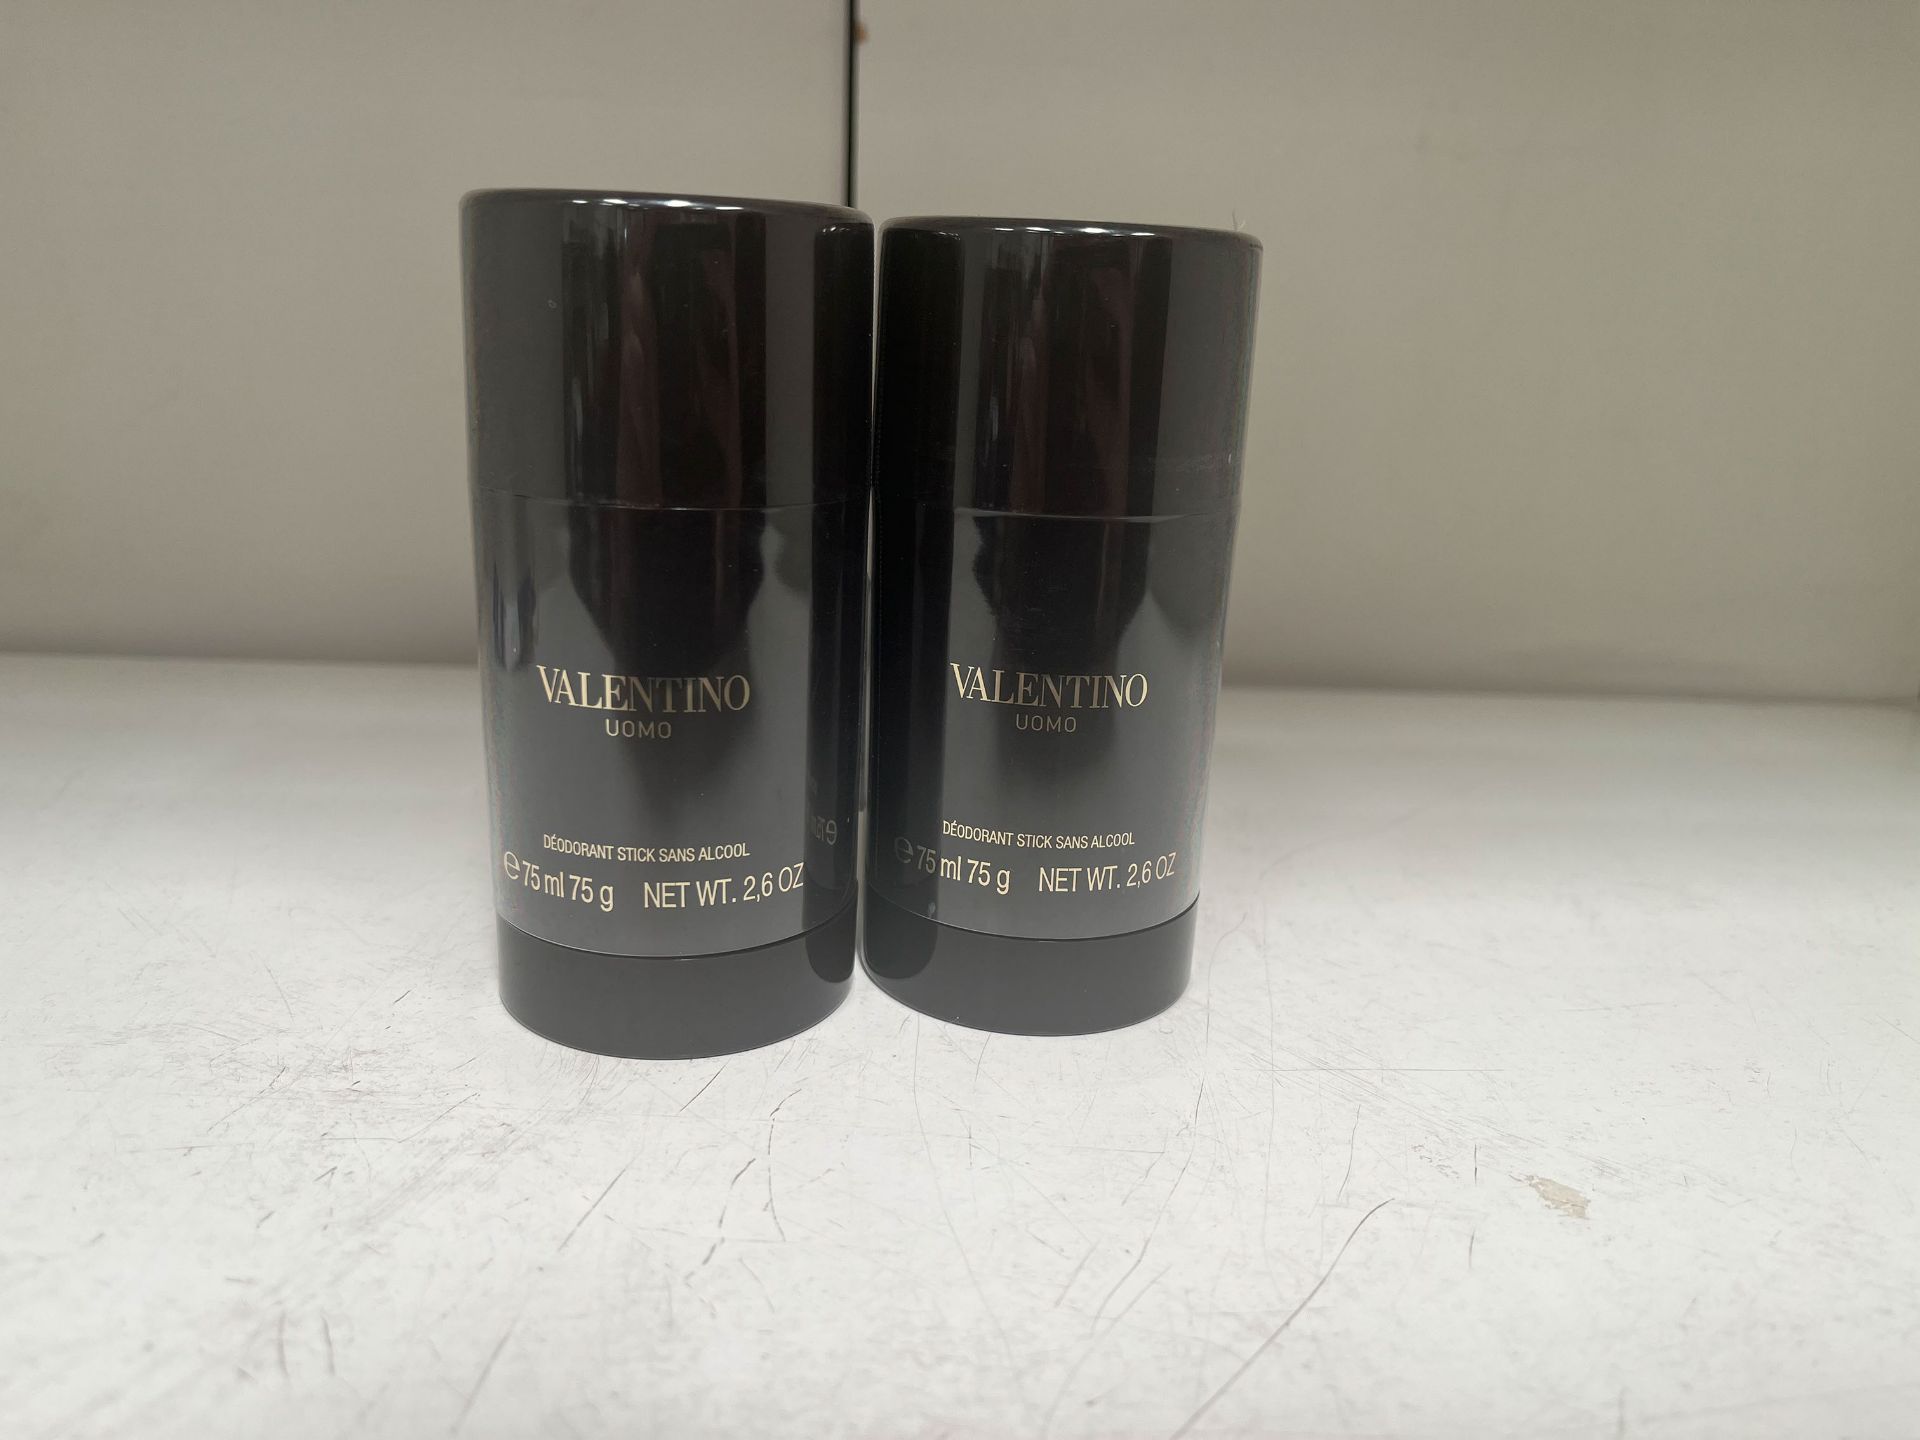 2x 75g Valentino Uomo Deodorant Sticks